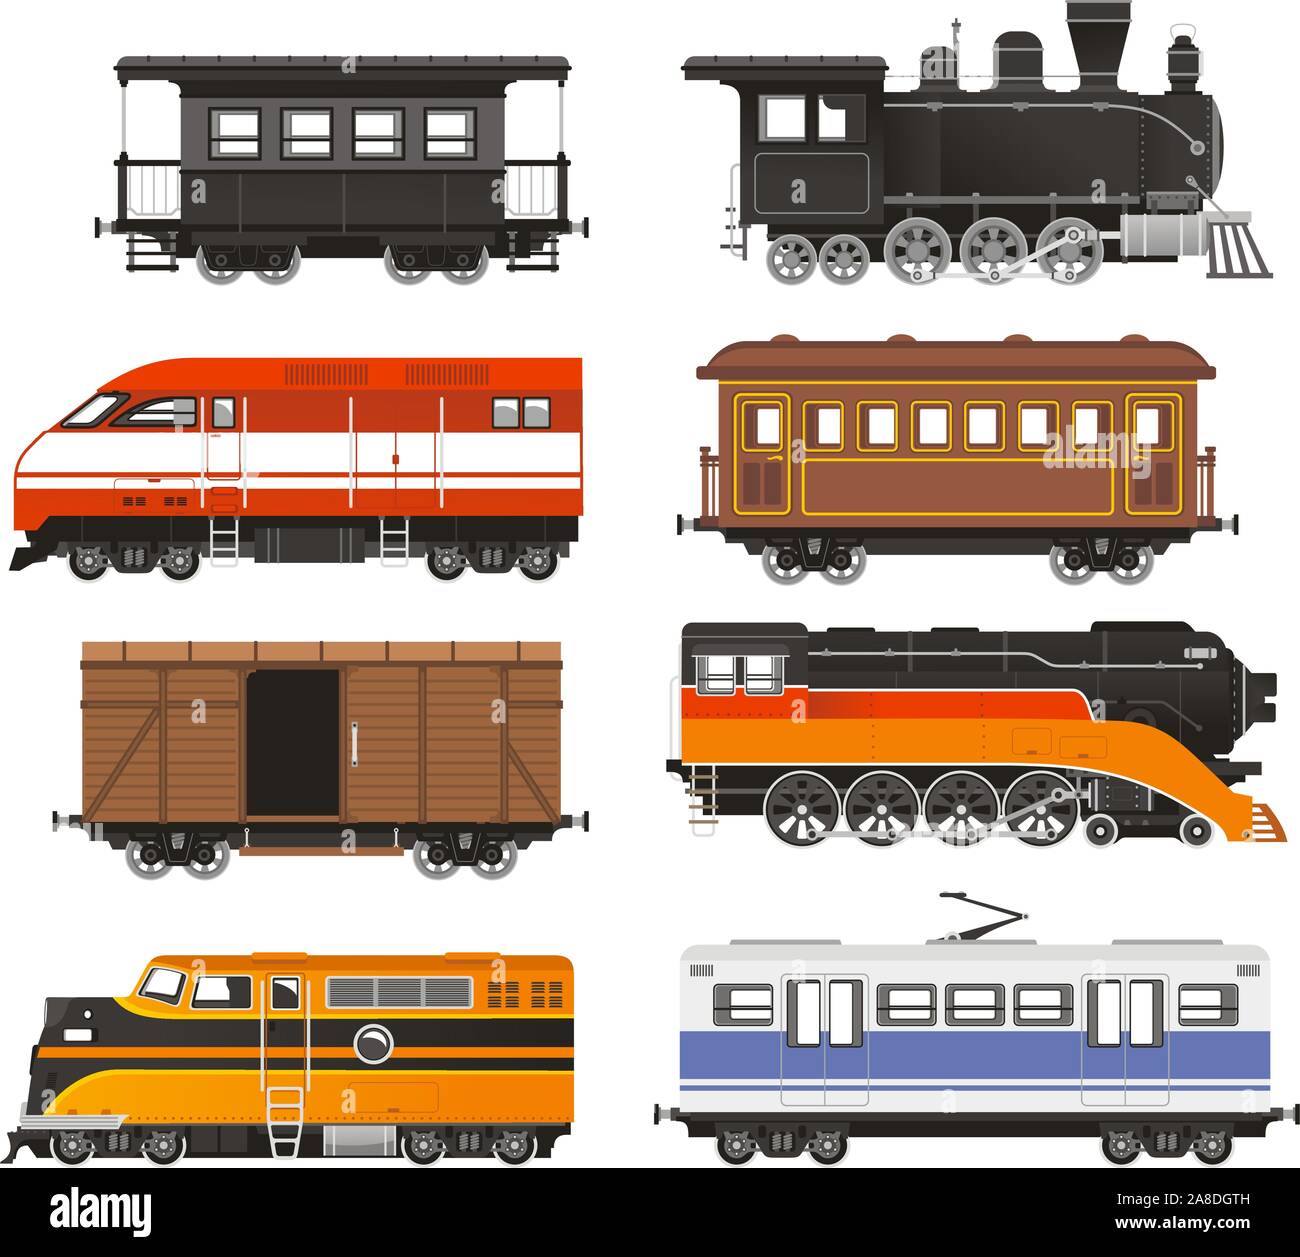 Locomotive Train Transport ferroviaire Transport illustration vectorielle. Illustration de Vecteur